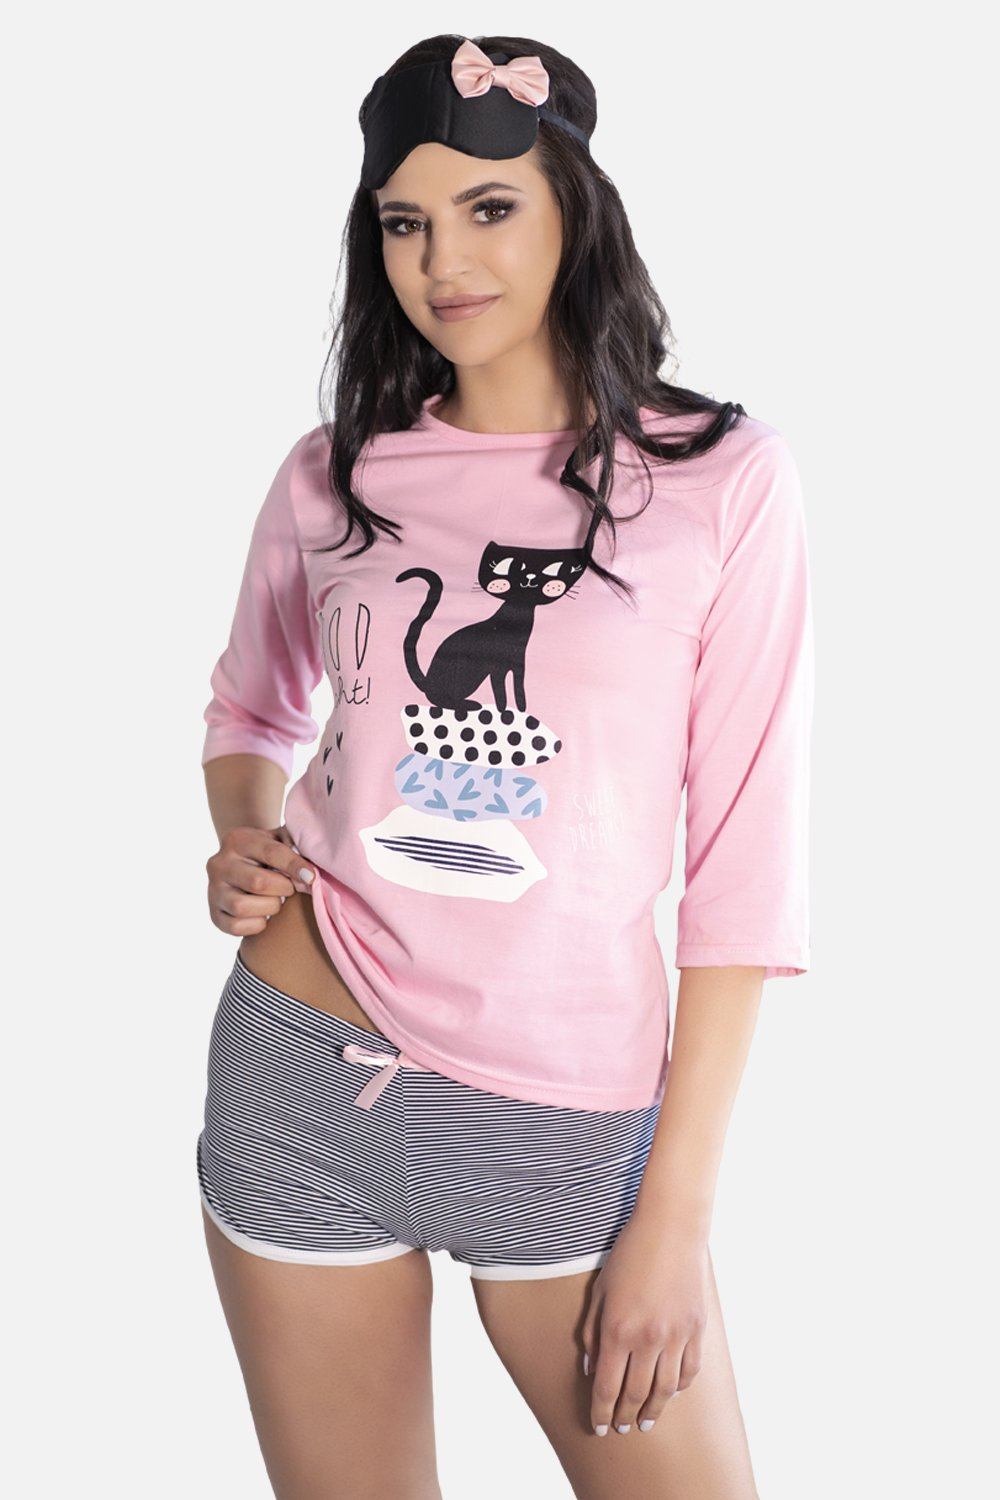 Aprodit Cat Pyjamas Pink